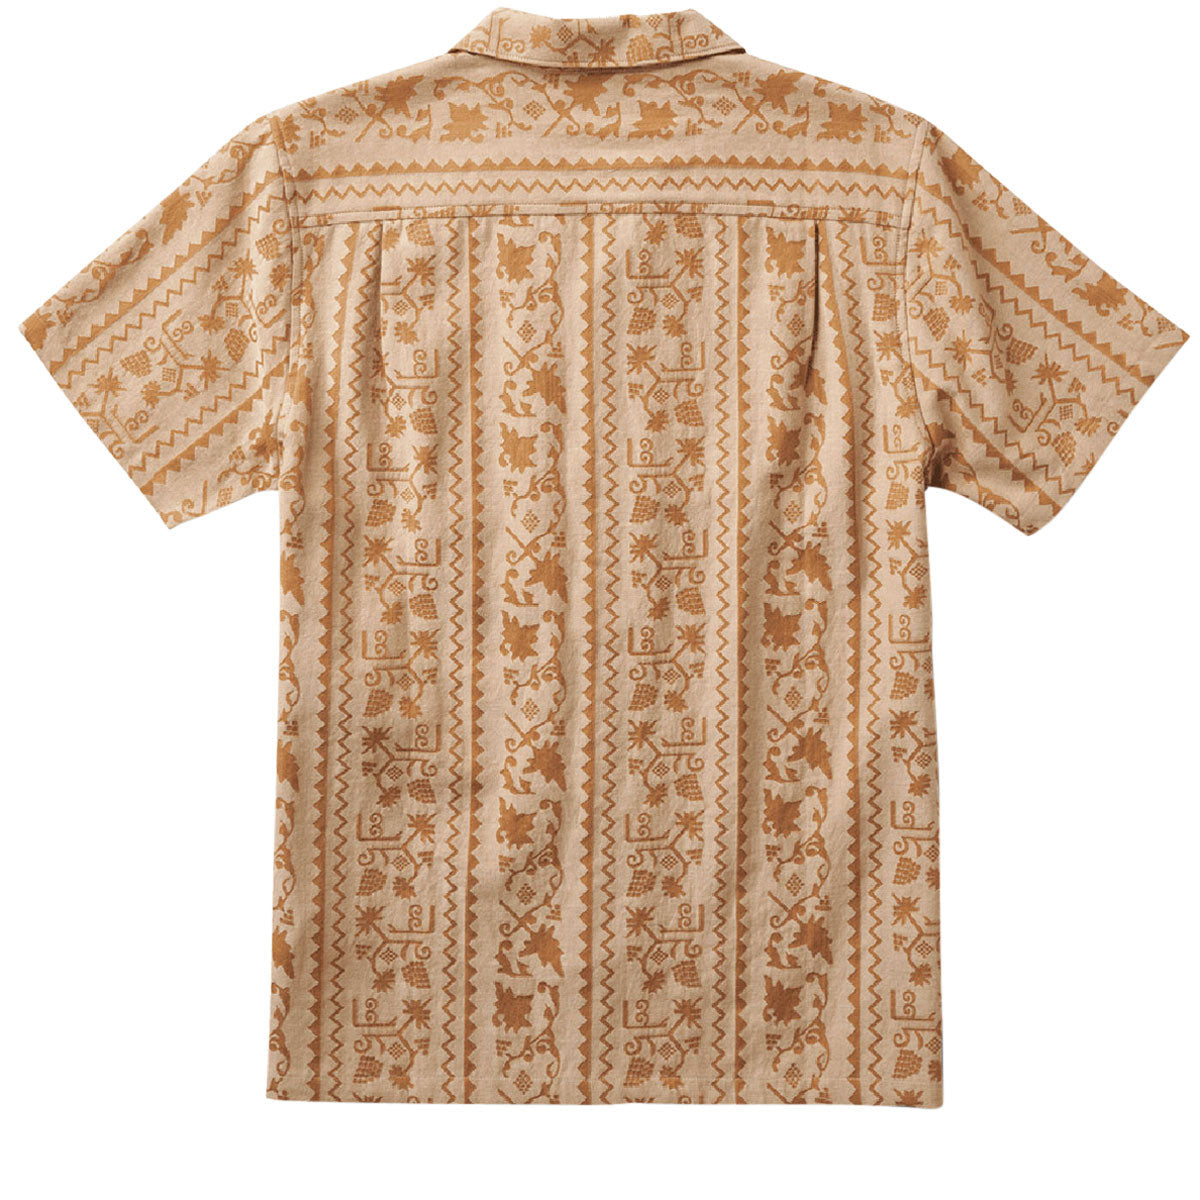 Roark Gonzo Woven Shirt - Sarda Almond image 4